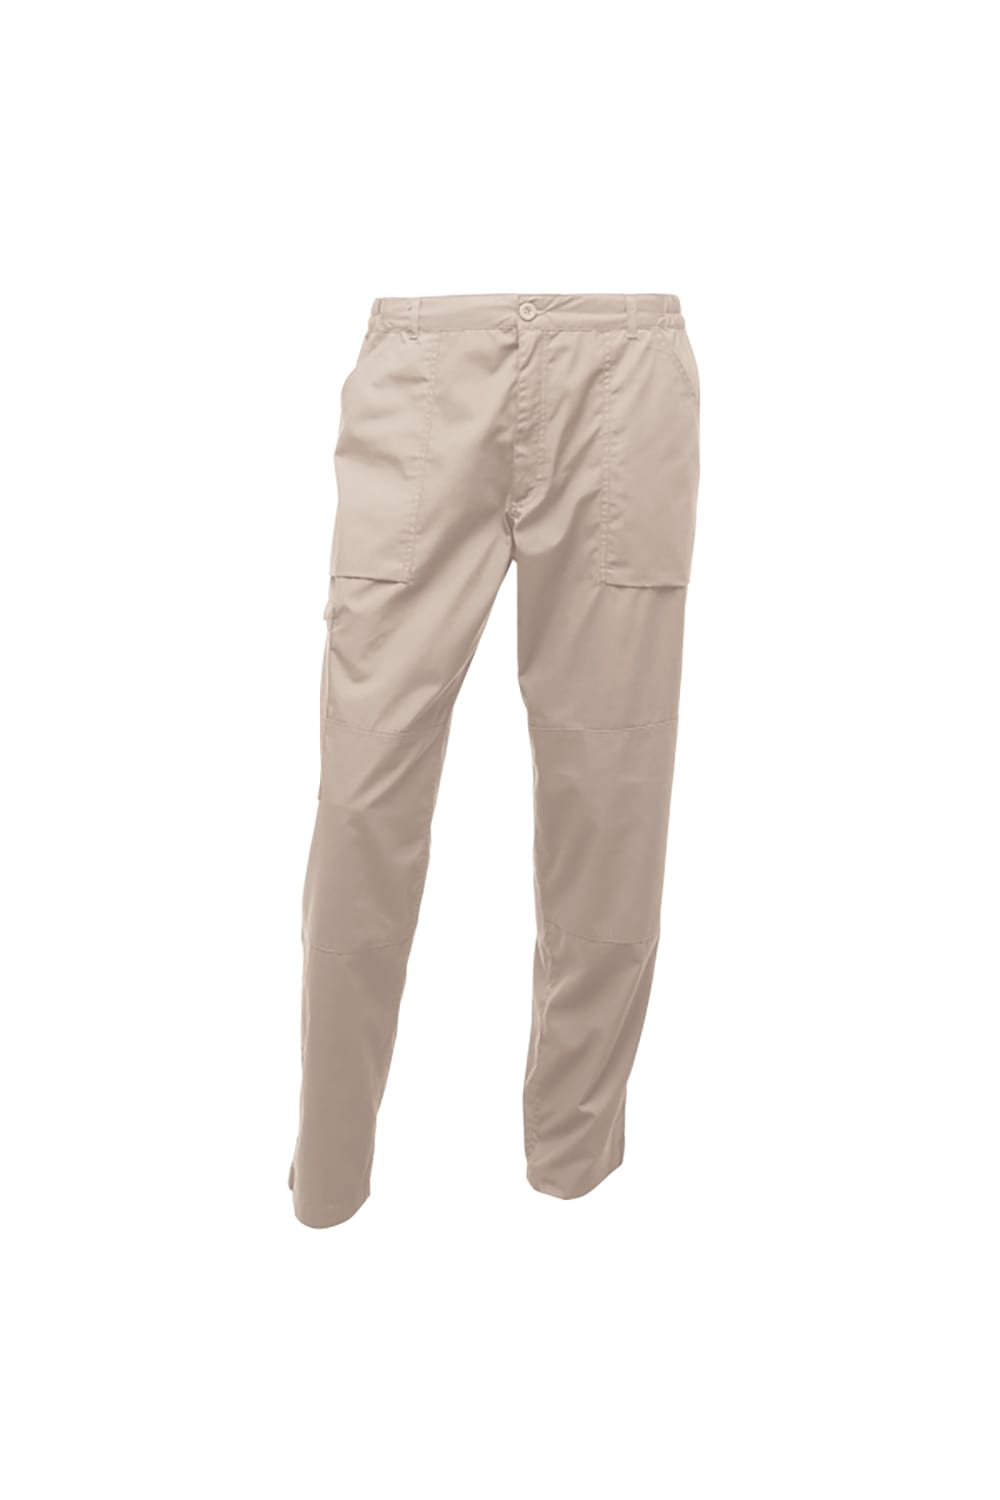 Regatta Mens Workwear Action Pants (Water Repellent) (Lichen)